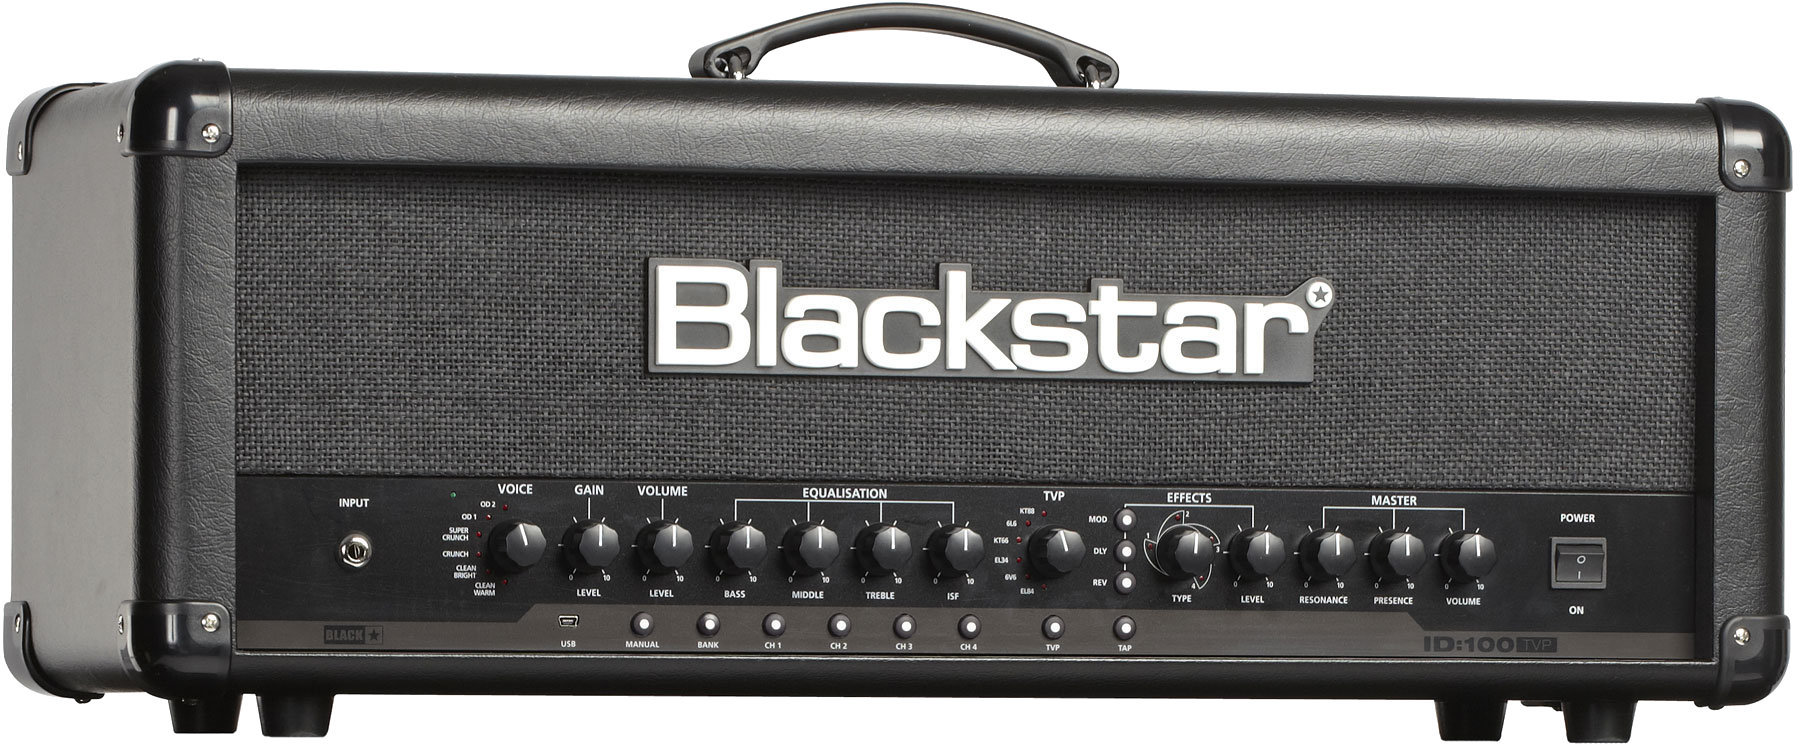 Modeling Guitar Amplifier Blackstar ID: 100 TVP Head